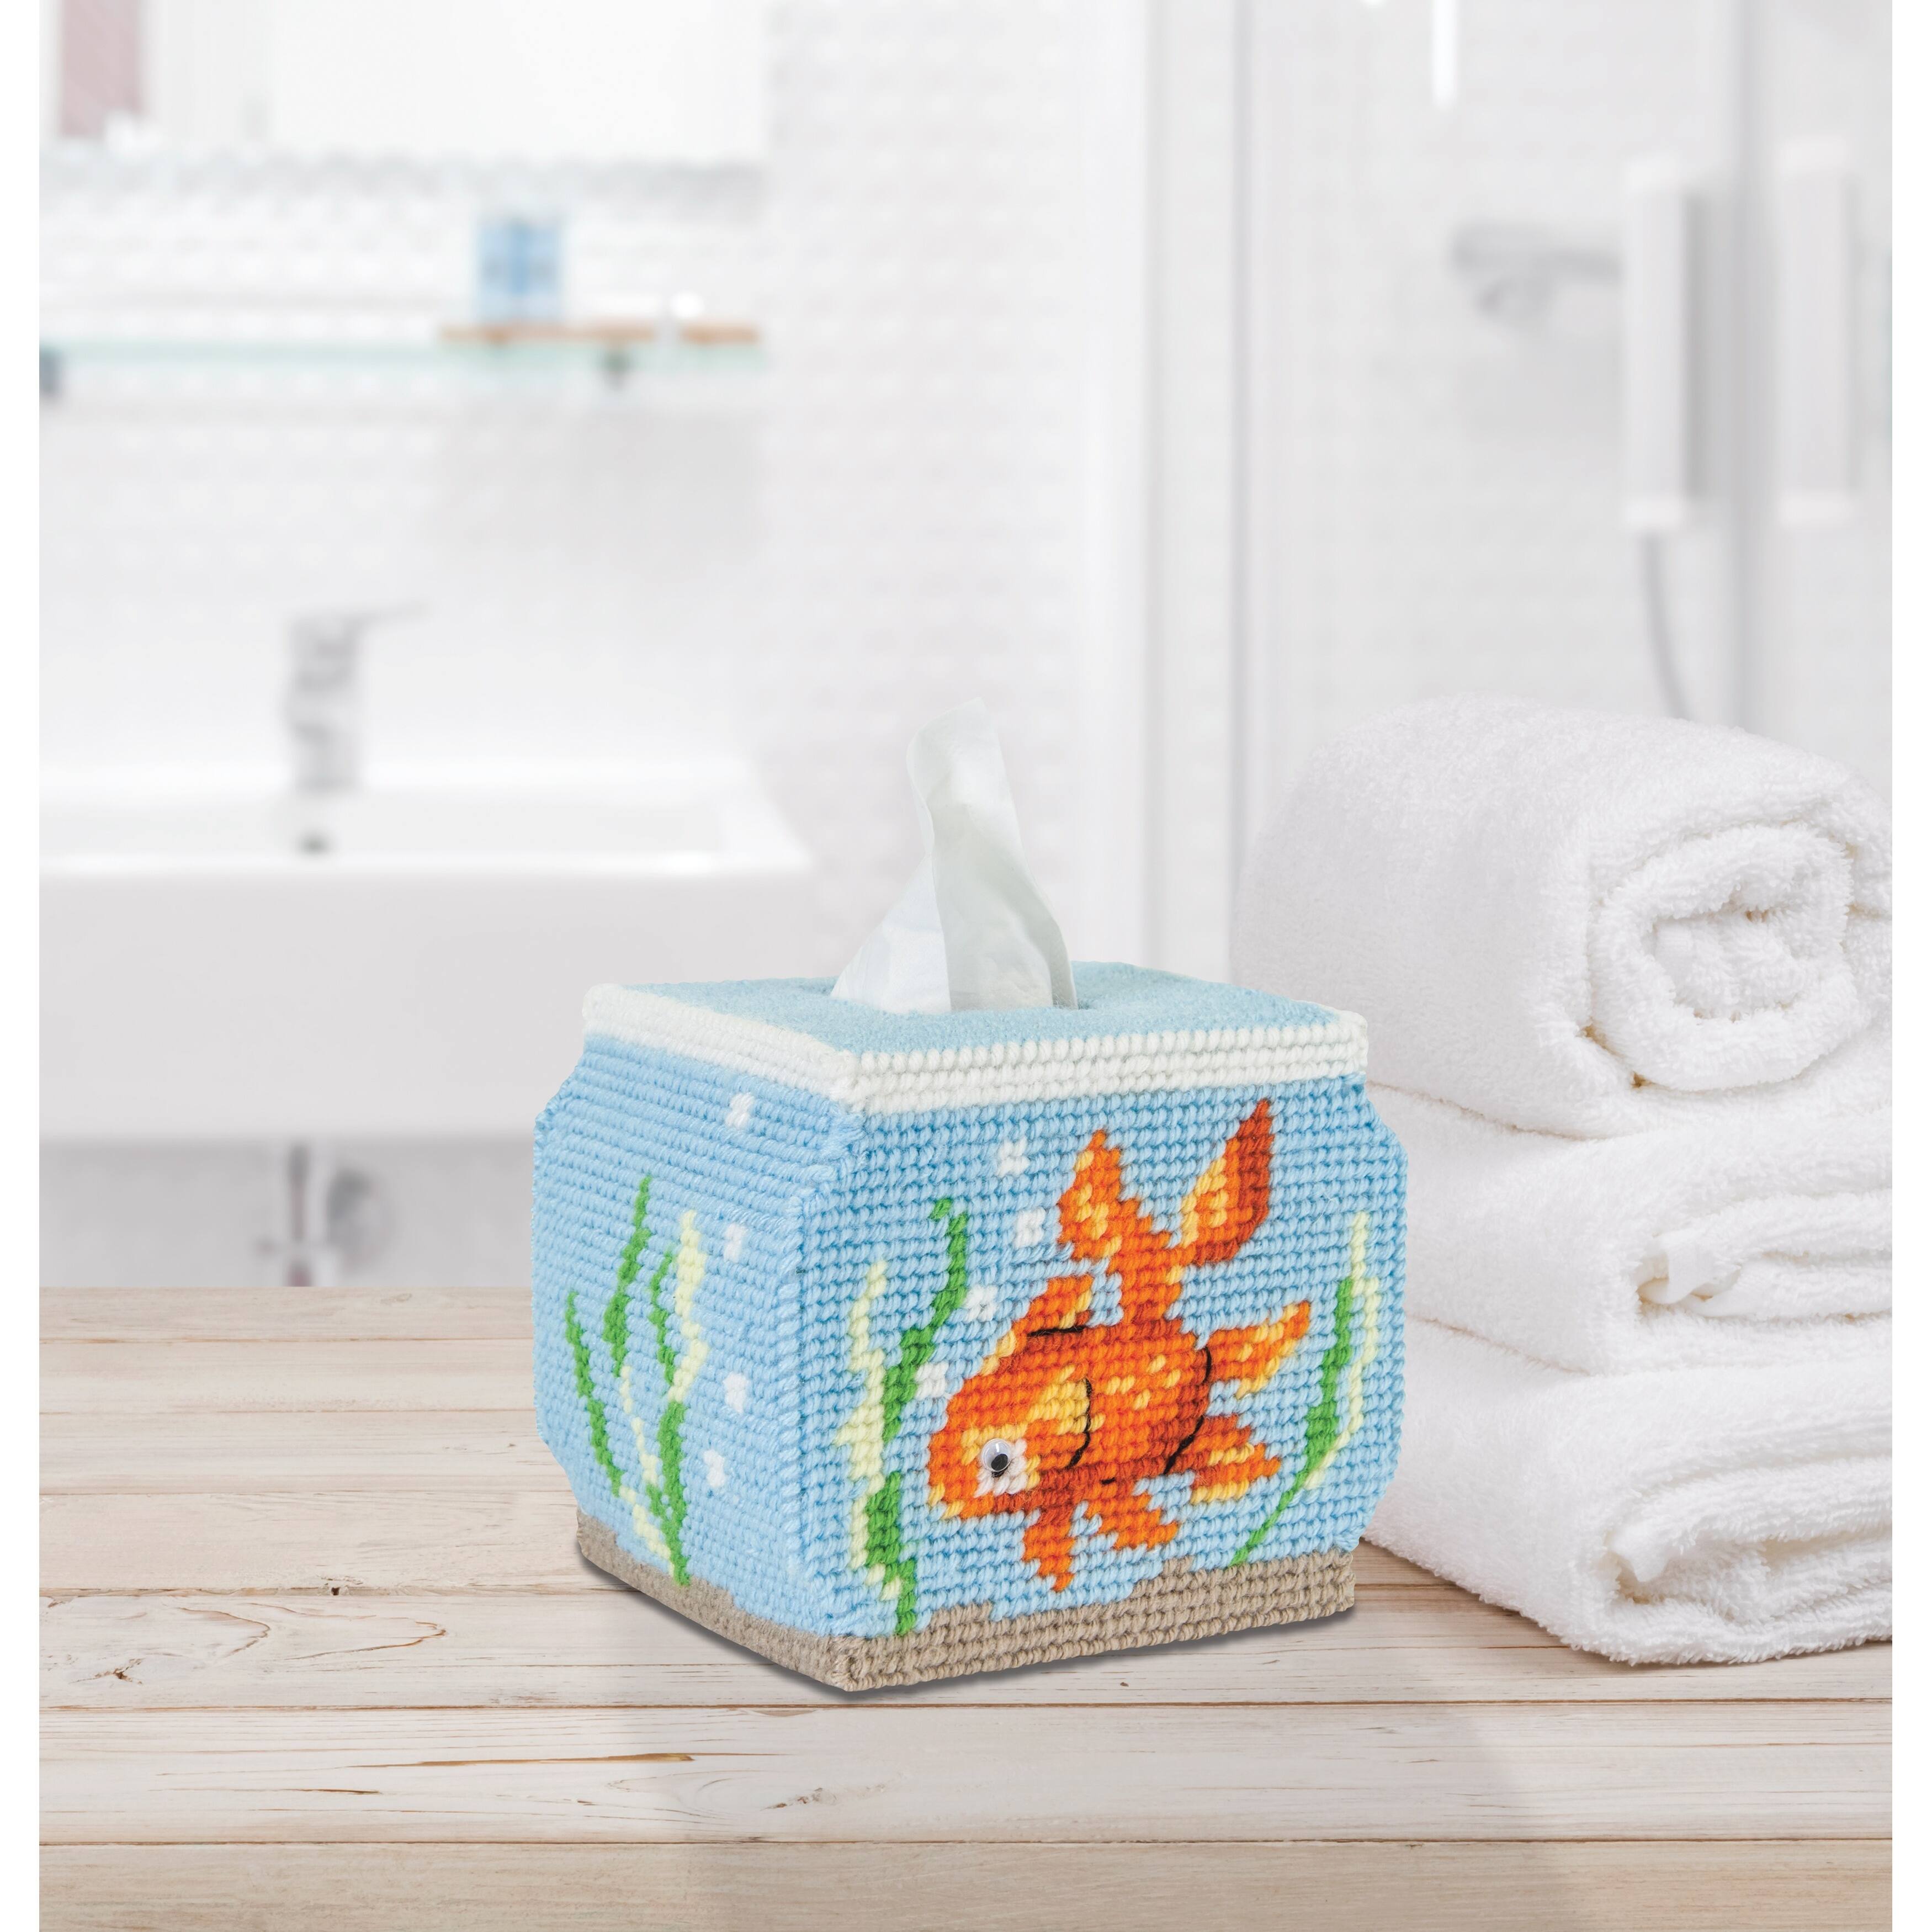 Mary Maxim 5&#x27;&#x27; Fish Bowl Plastic Canvas Tissue Box Kit, 7ct.